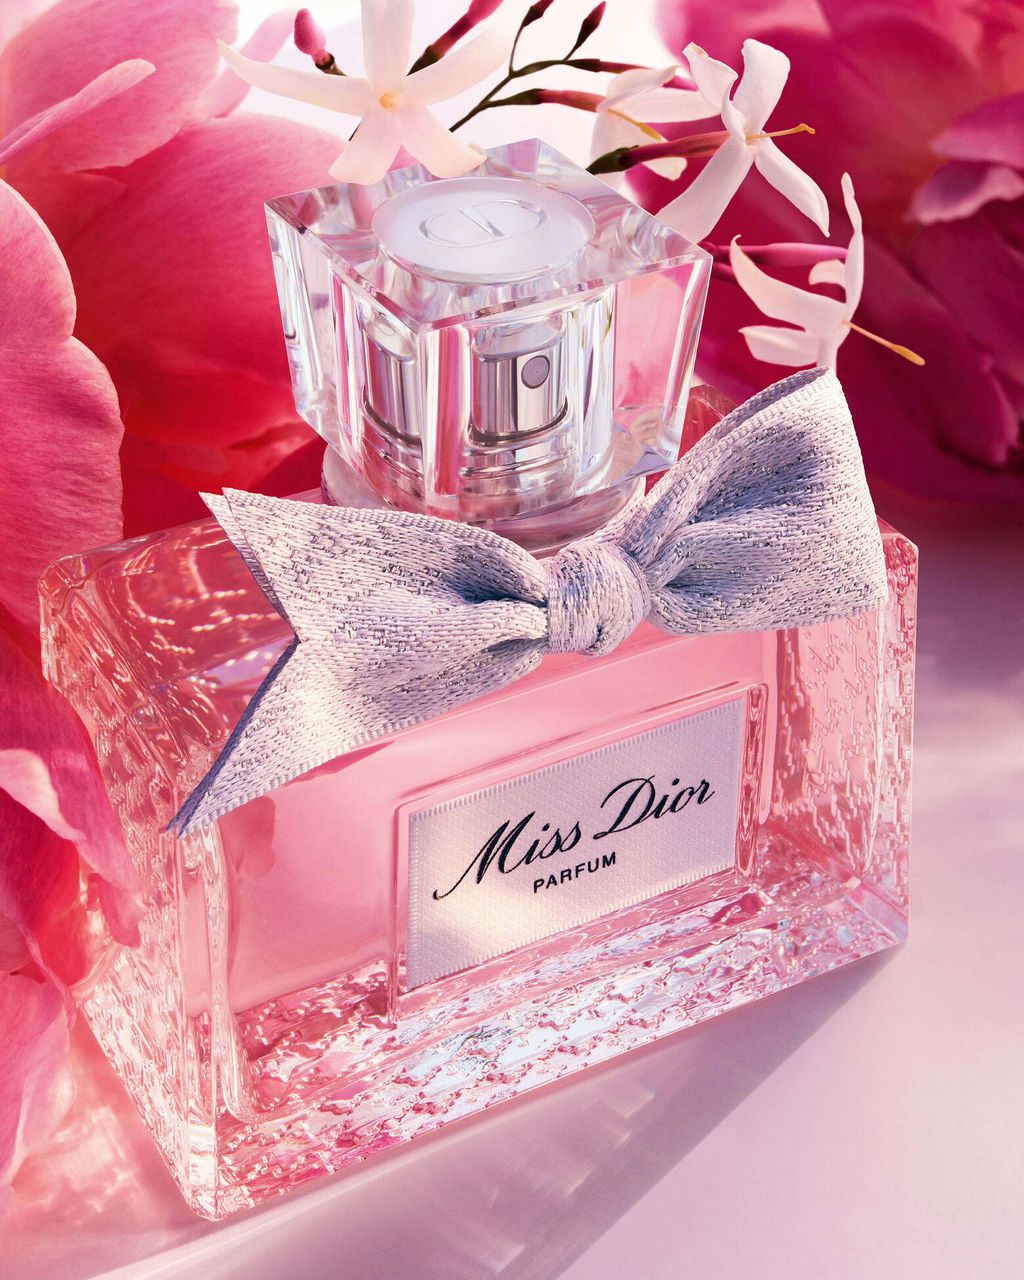 Miss Dior Parfum - Dior 80ml 90usd